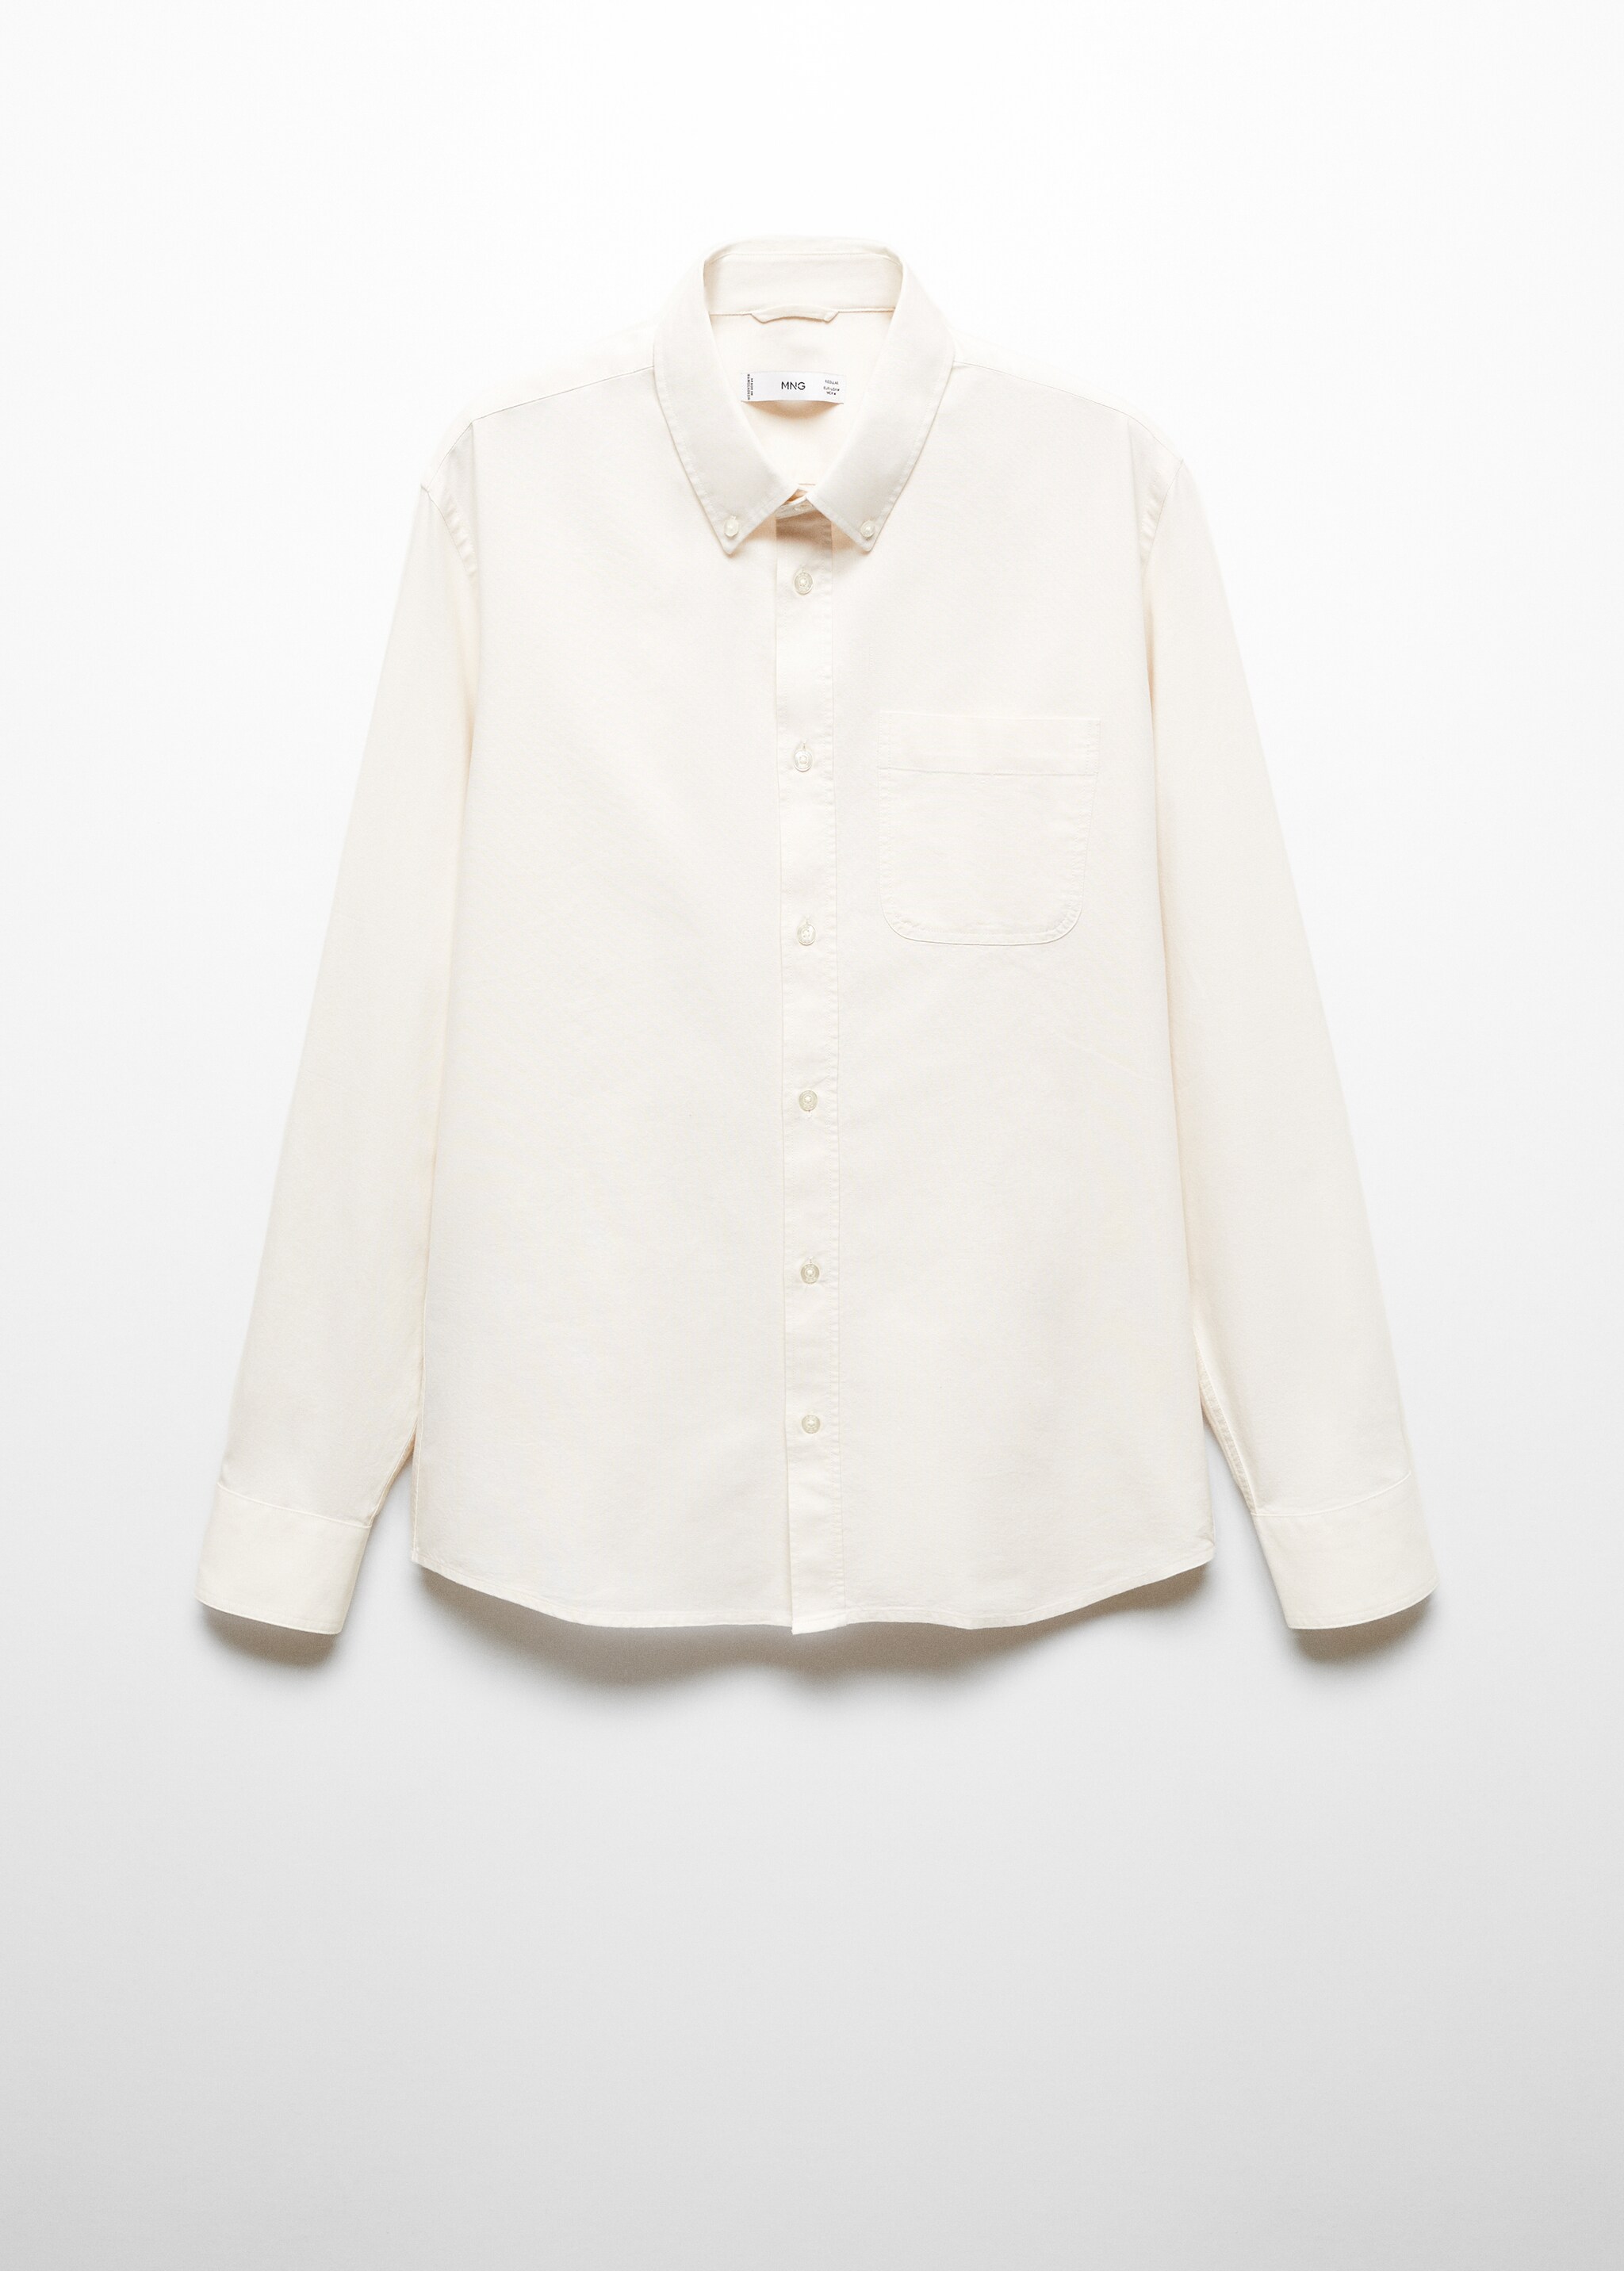 Camisa regular fit Oxford algodón - Artículo sin modelo